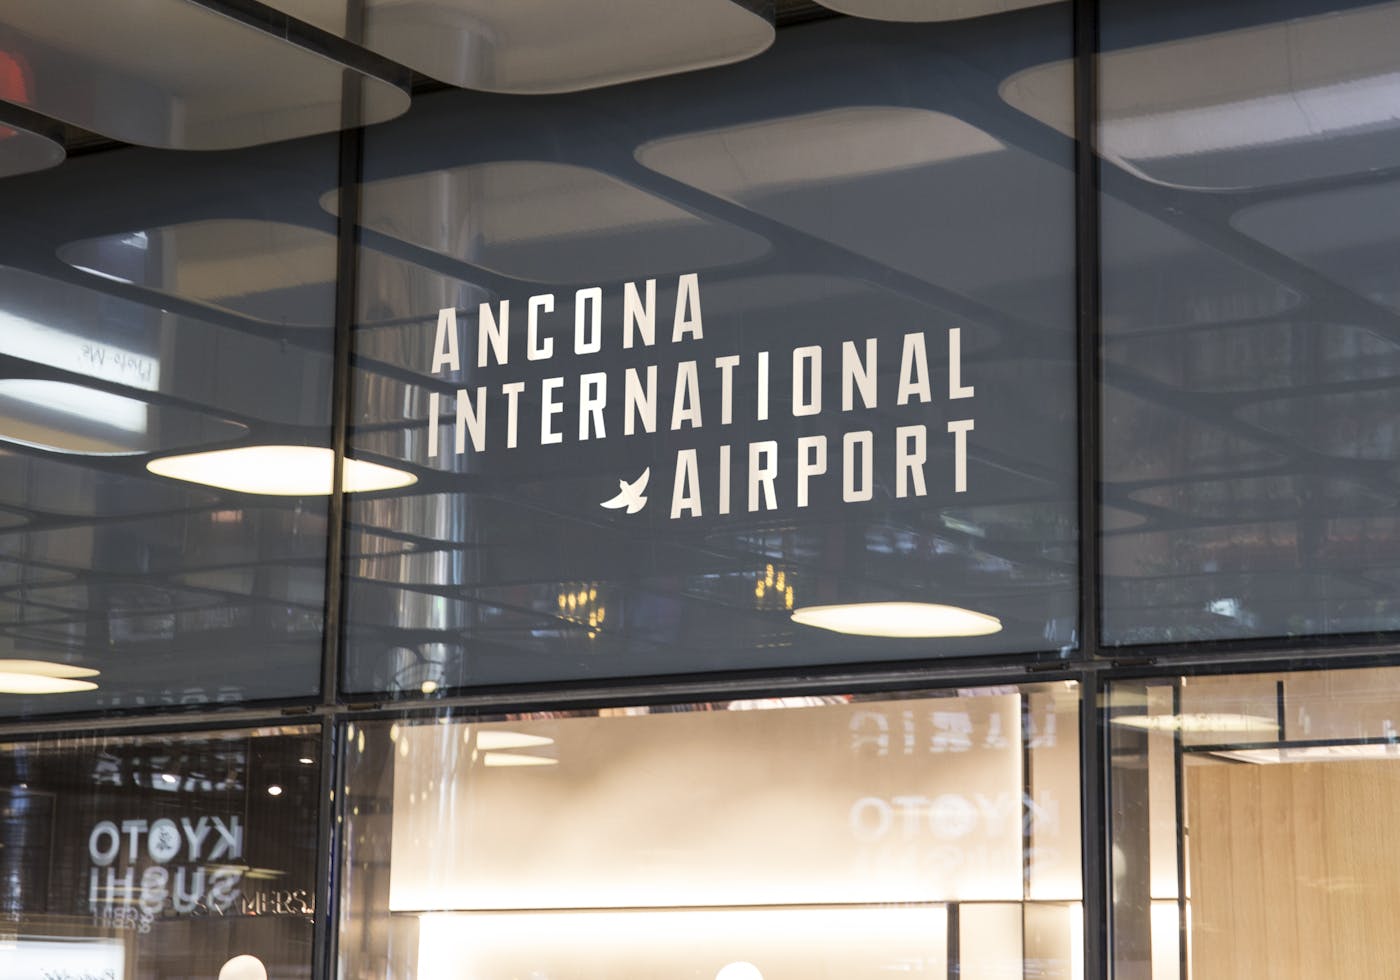 5 B Ancona International Airport shop window mockup